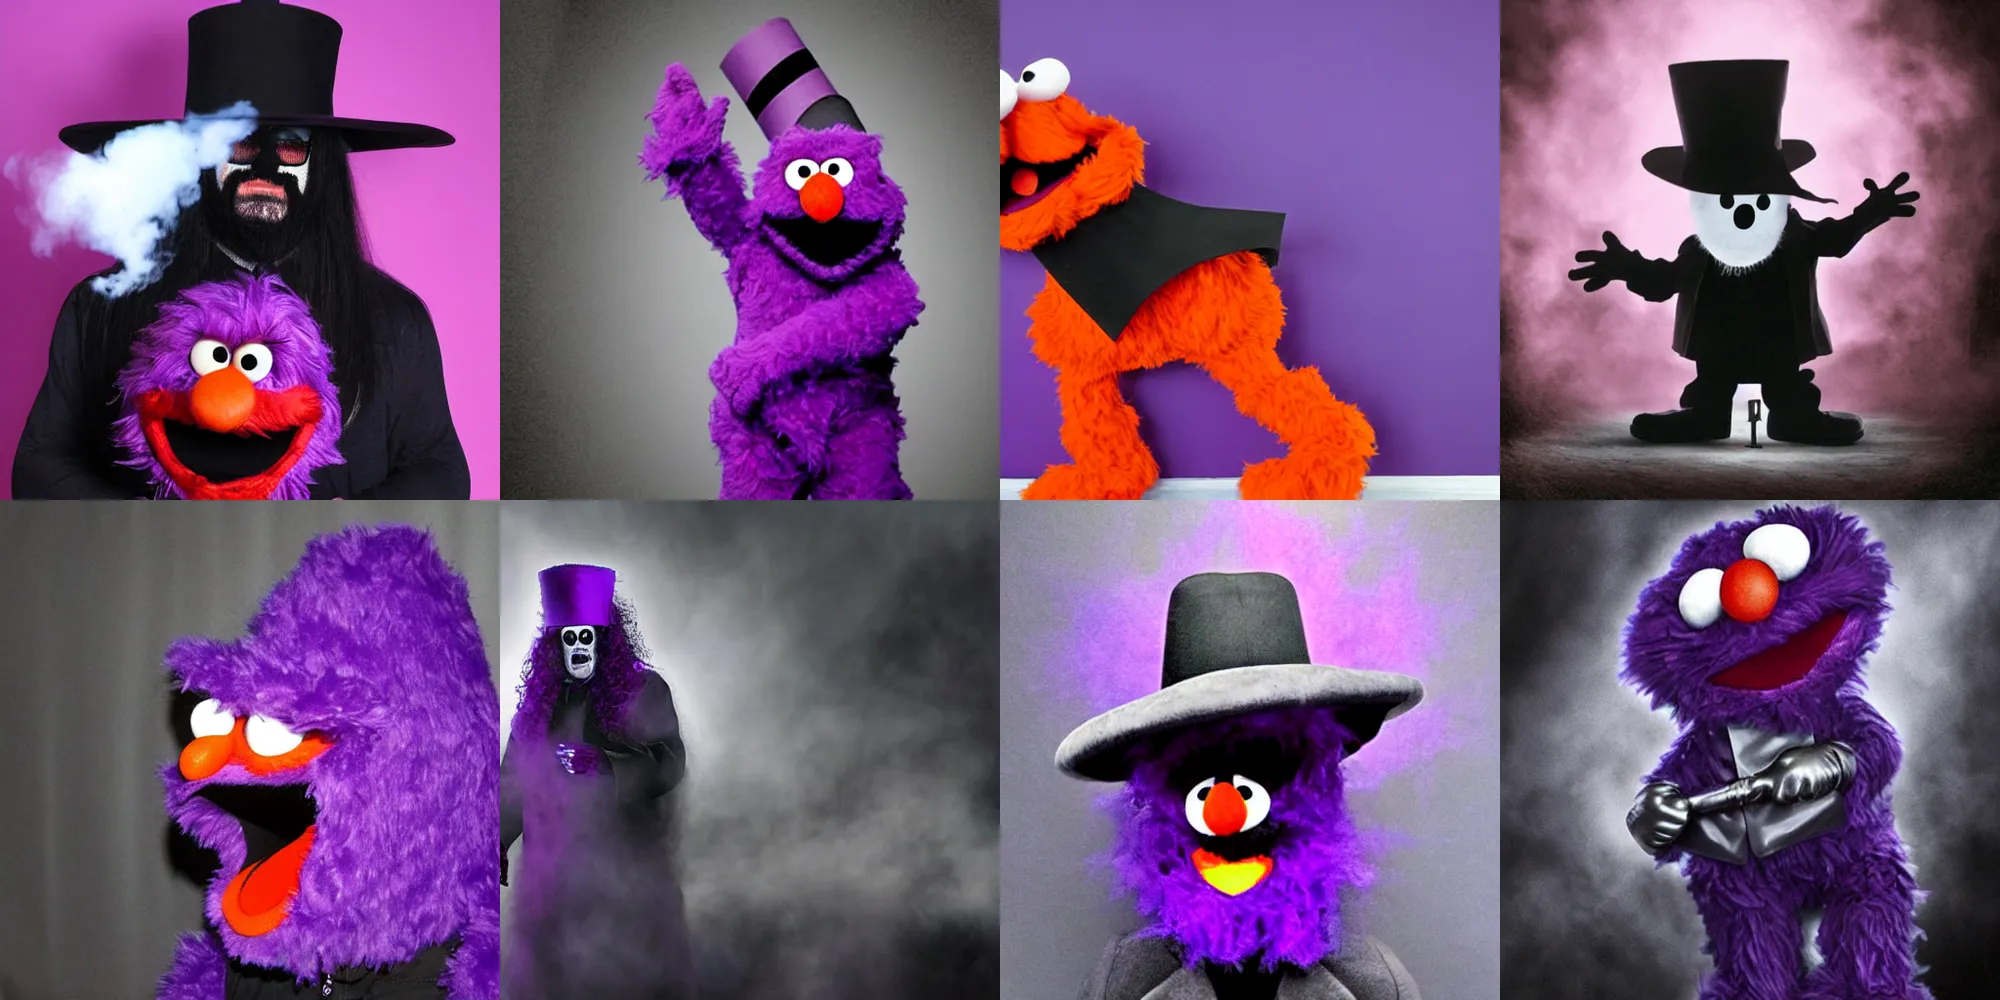 Prompt: Elmo dressed as The Undertaker, detailed, hyper realistic, purple fog, atmospheric